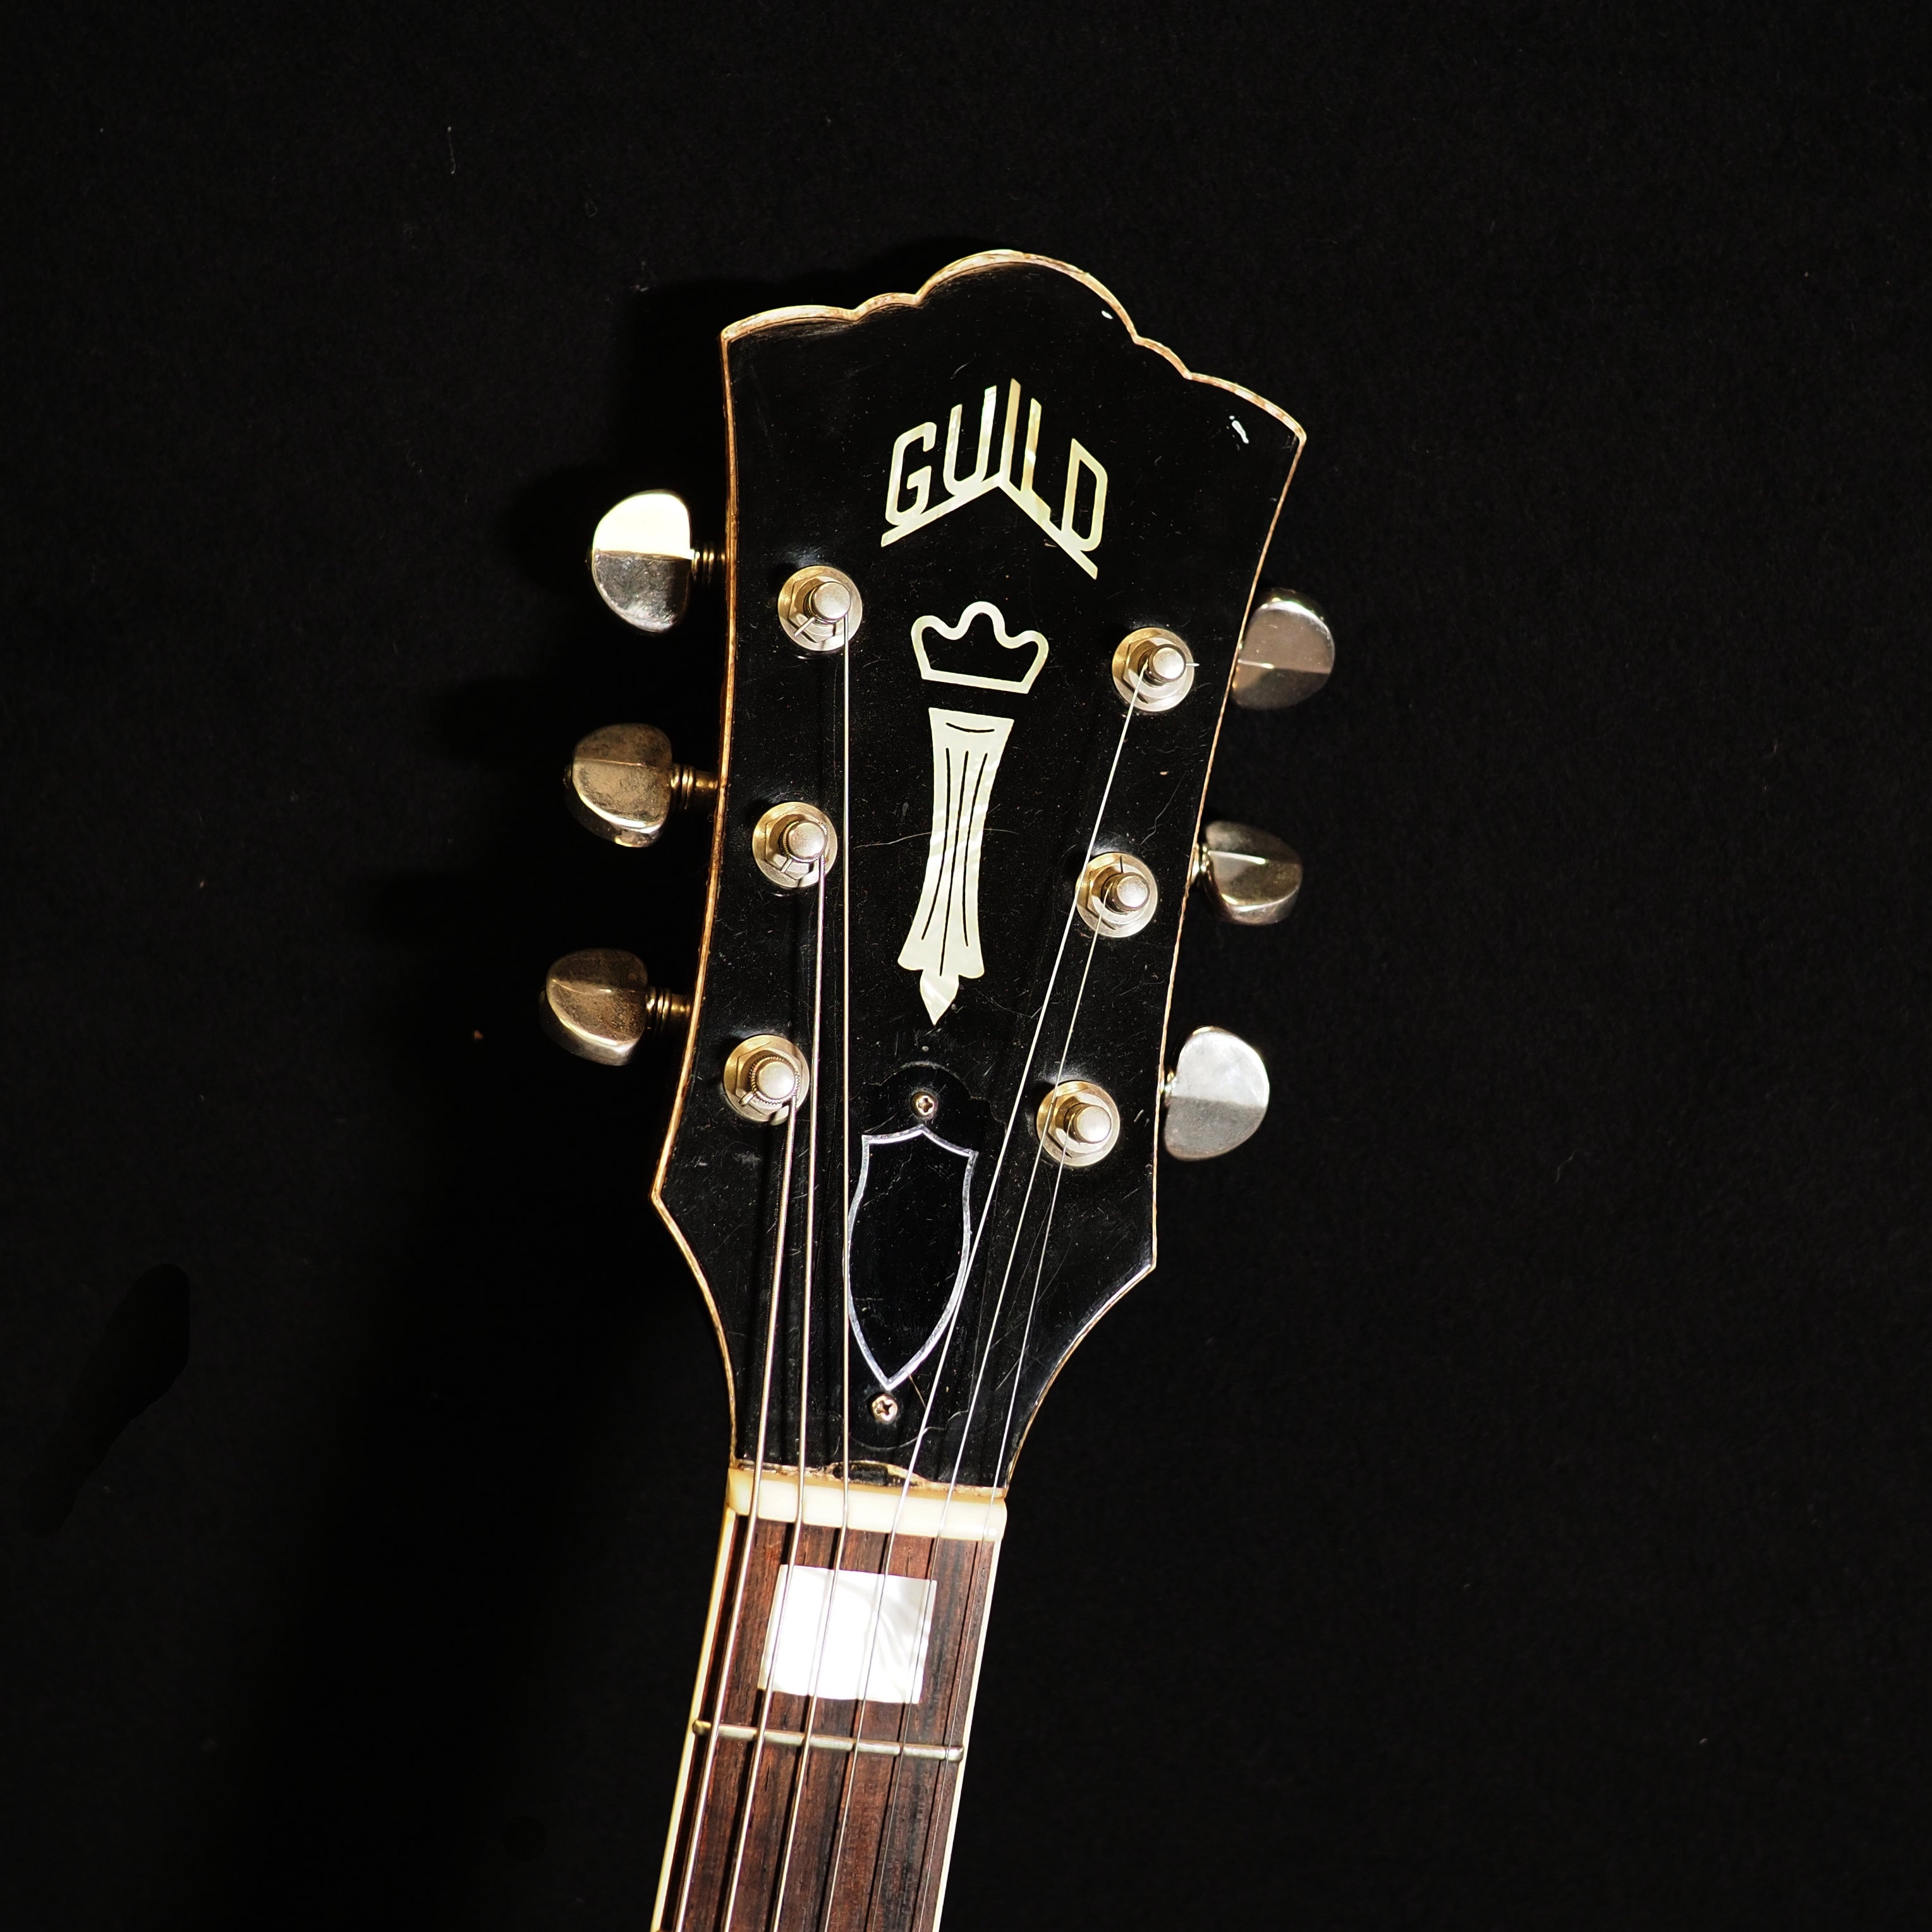 Guild x-175 in Sunburst from 1968 - wurst.guitars